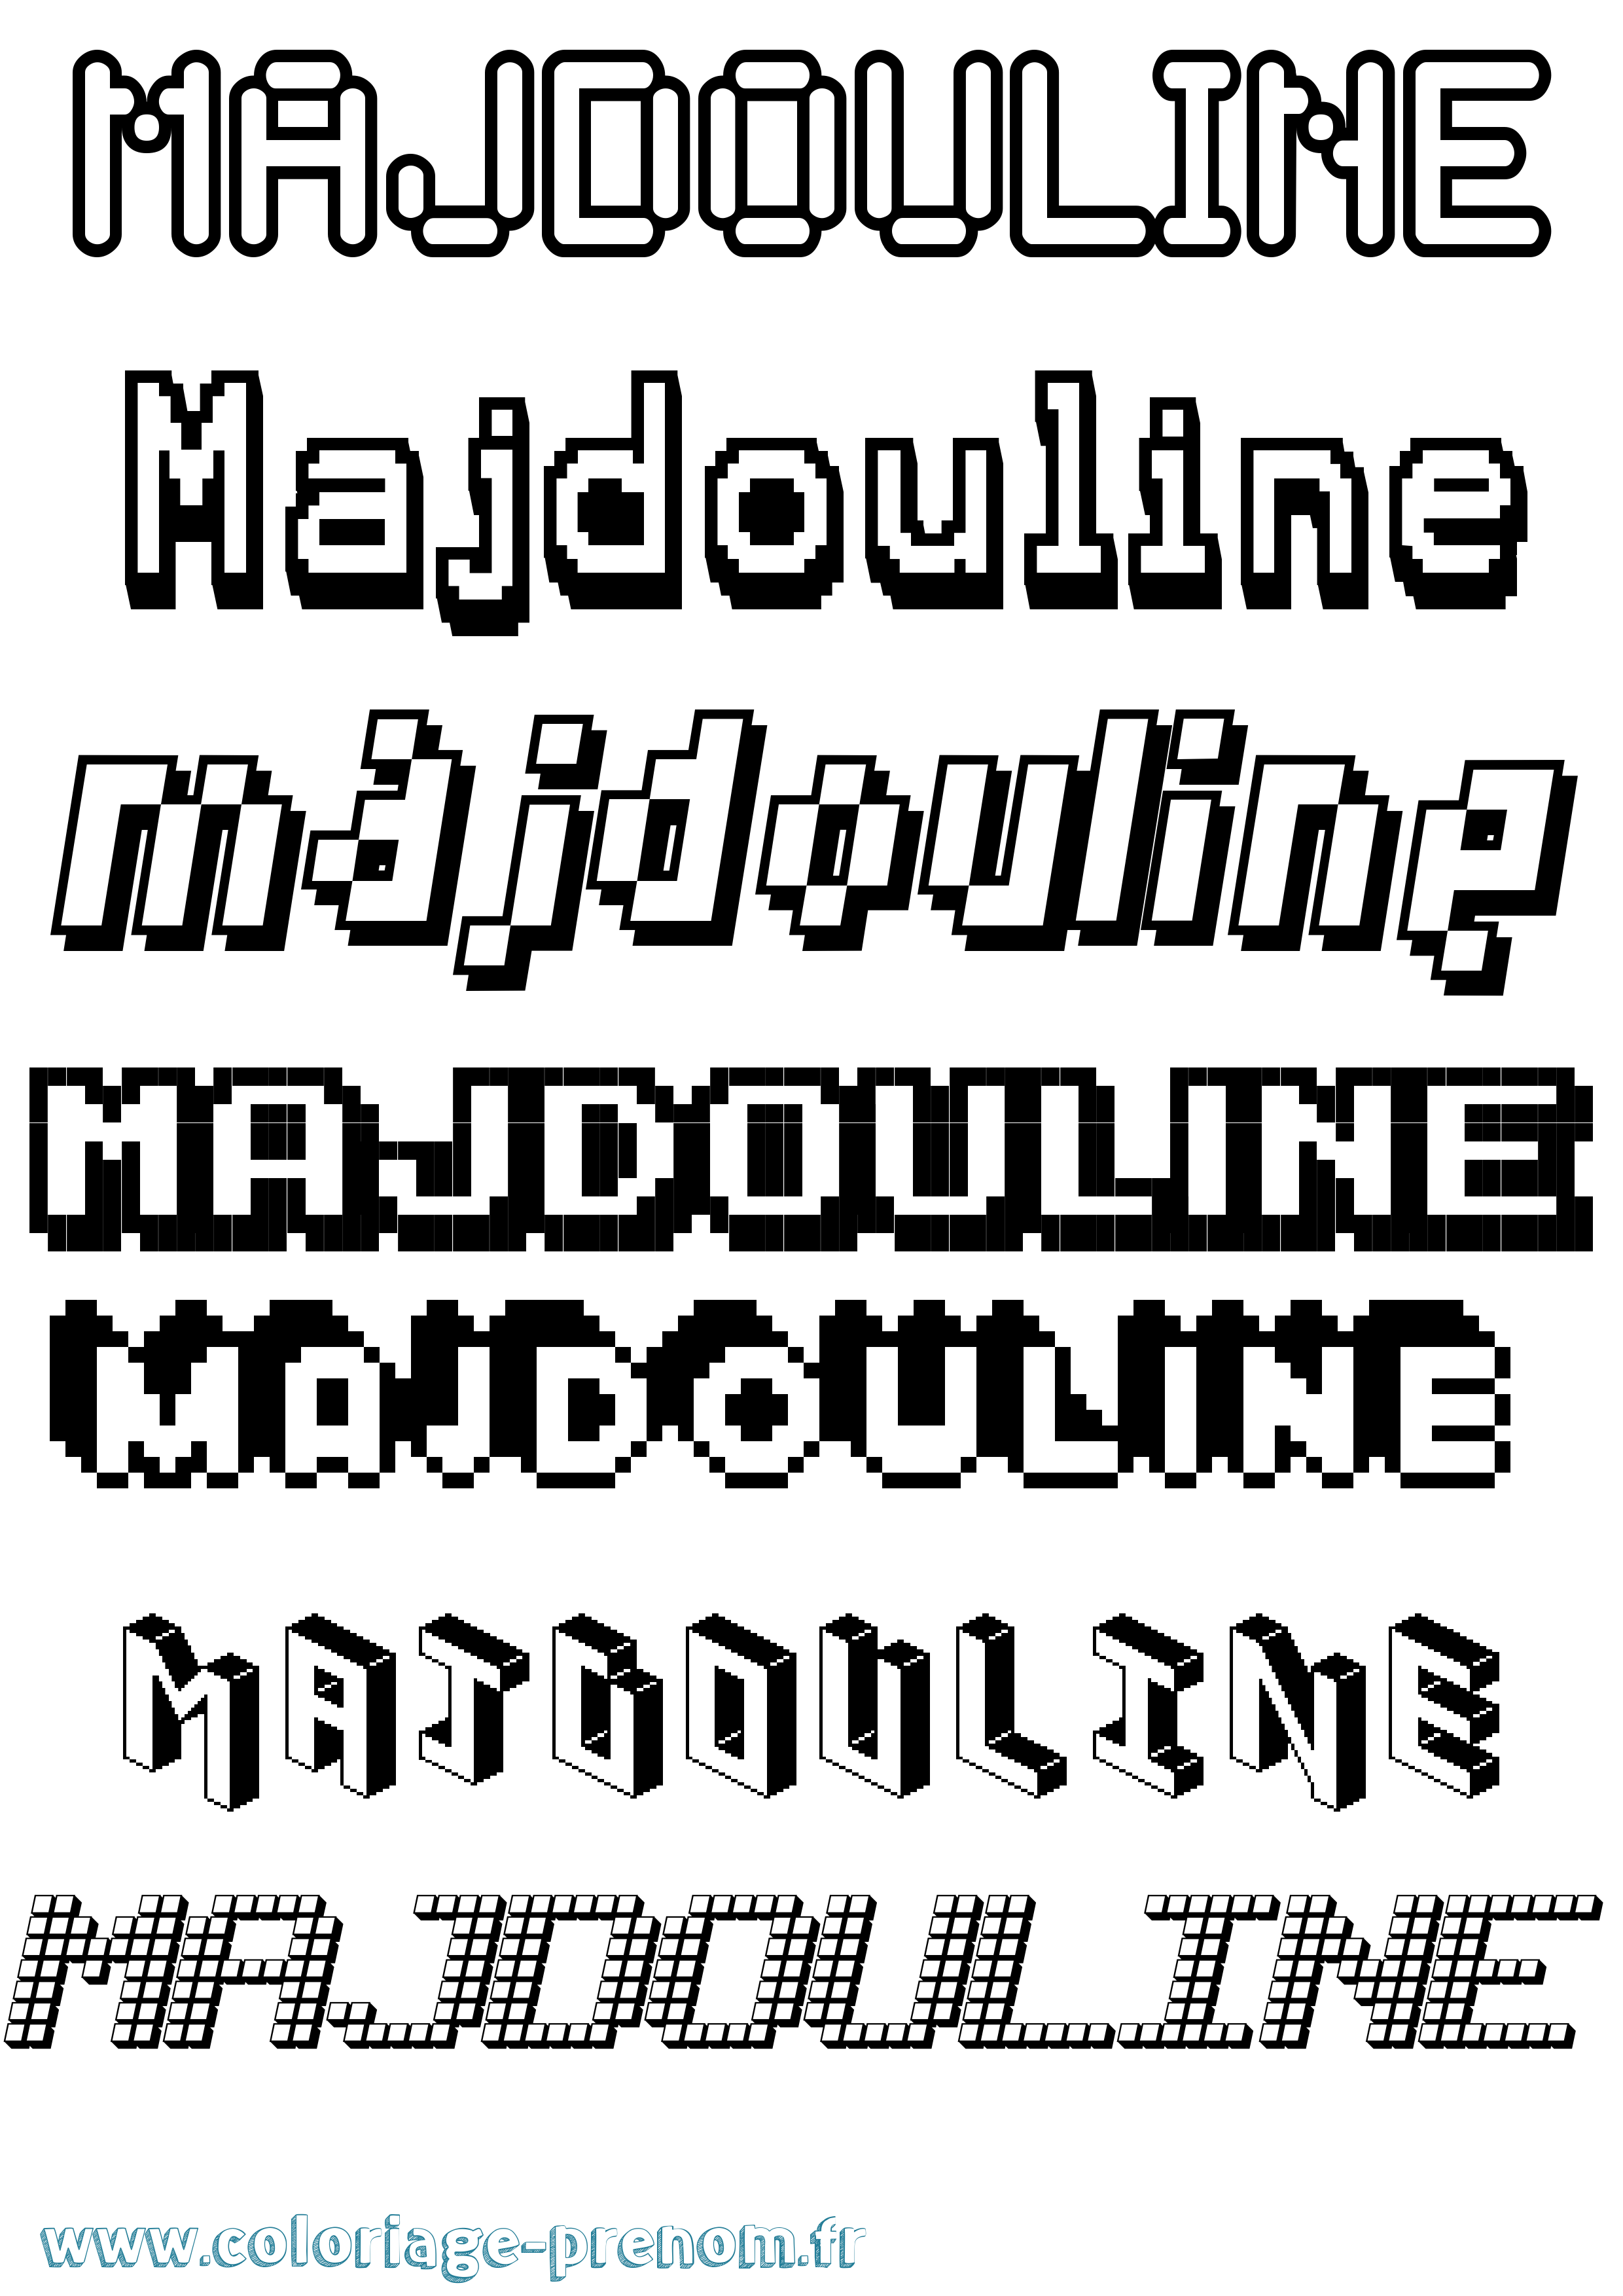 Coloriage prénom Majdouline Pixel